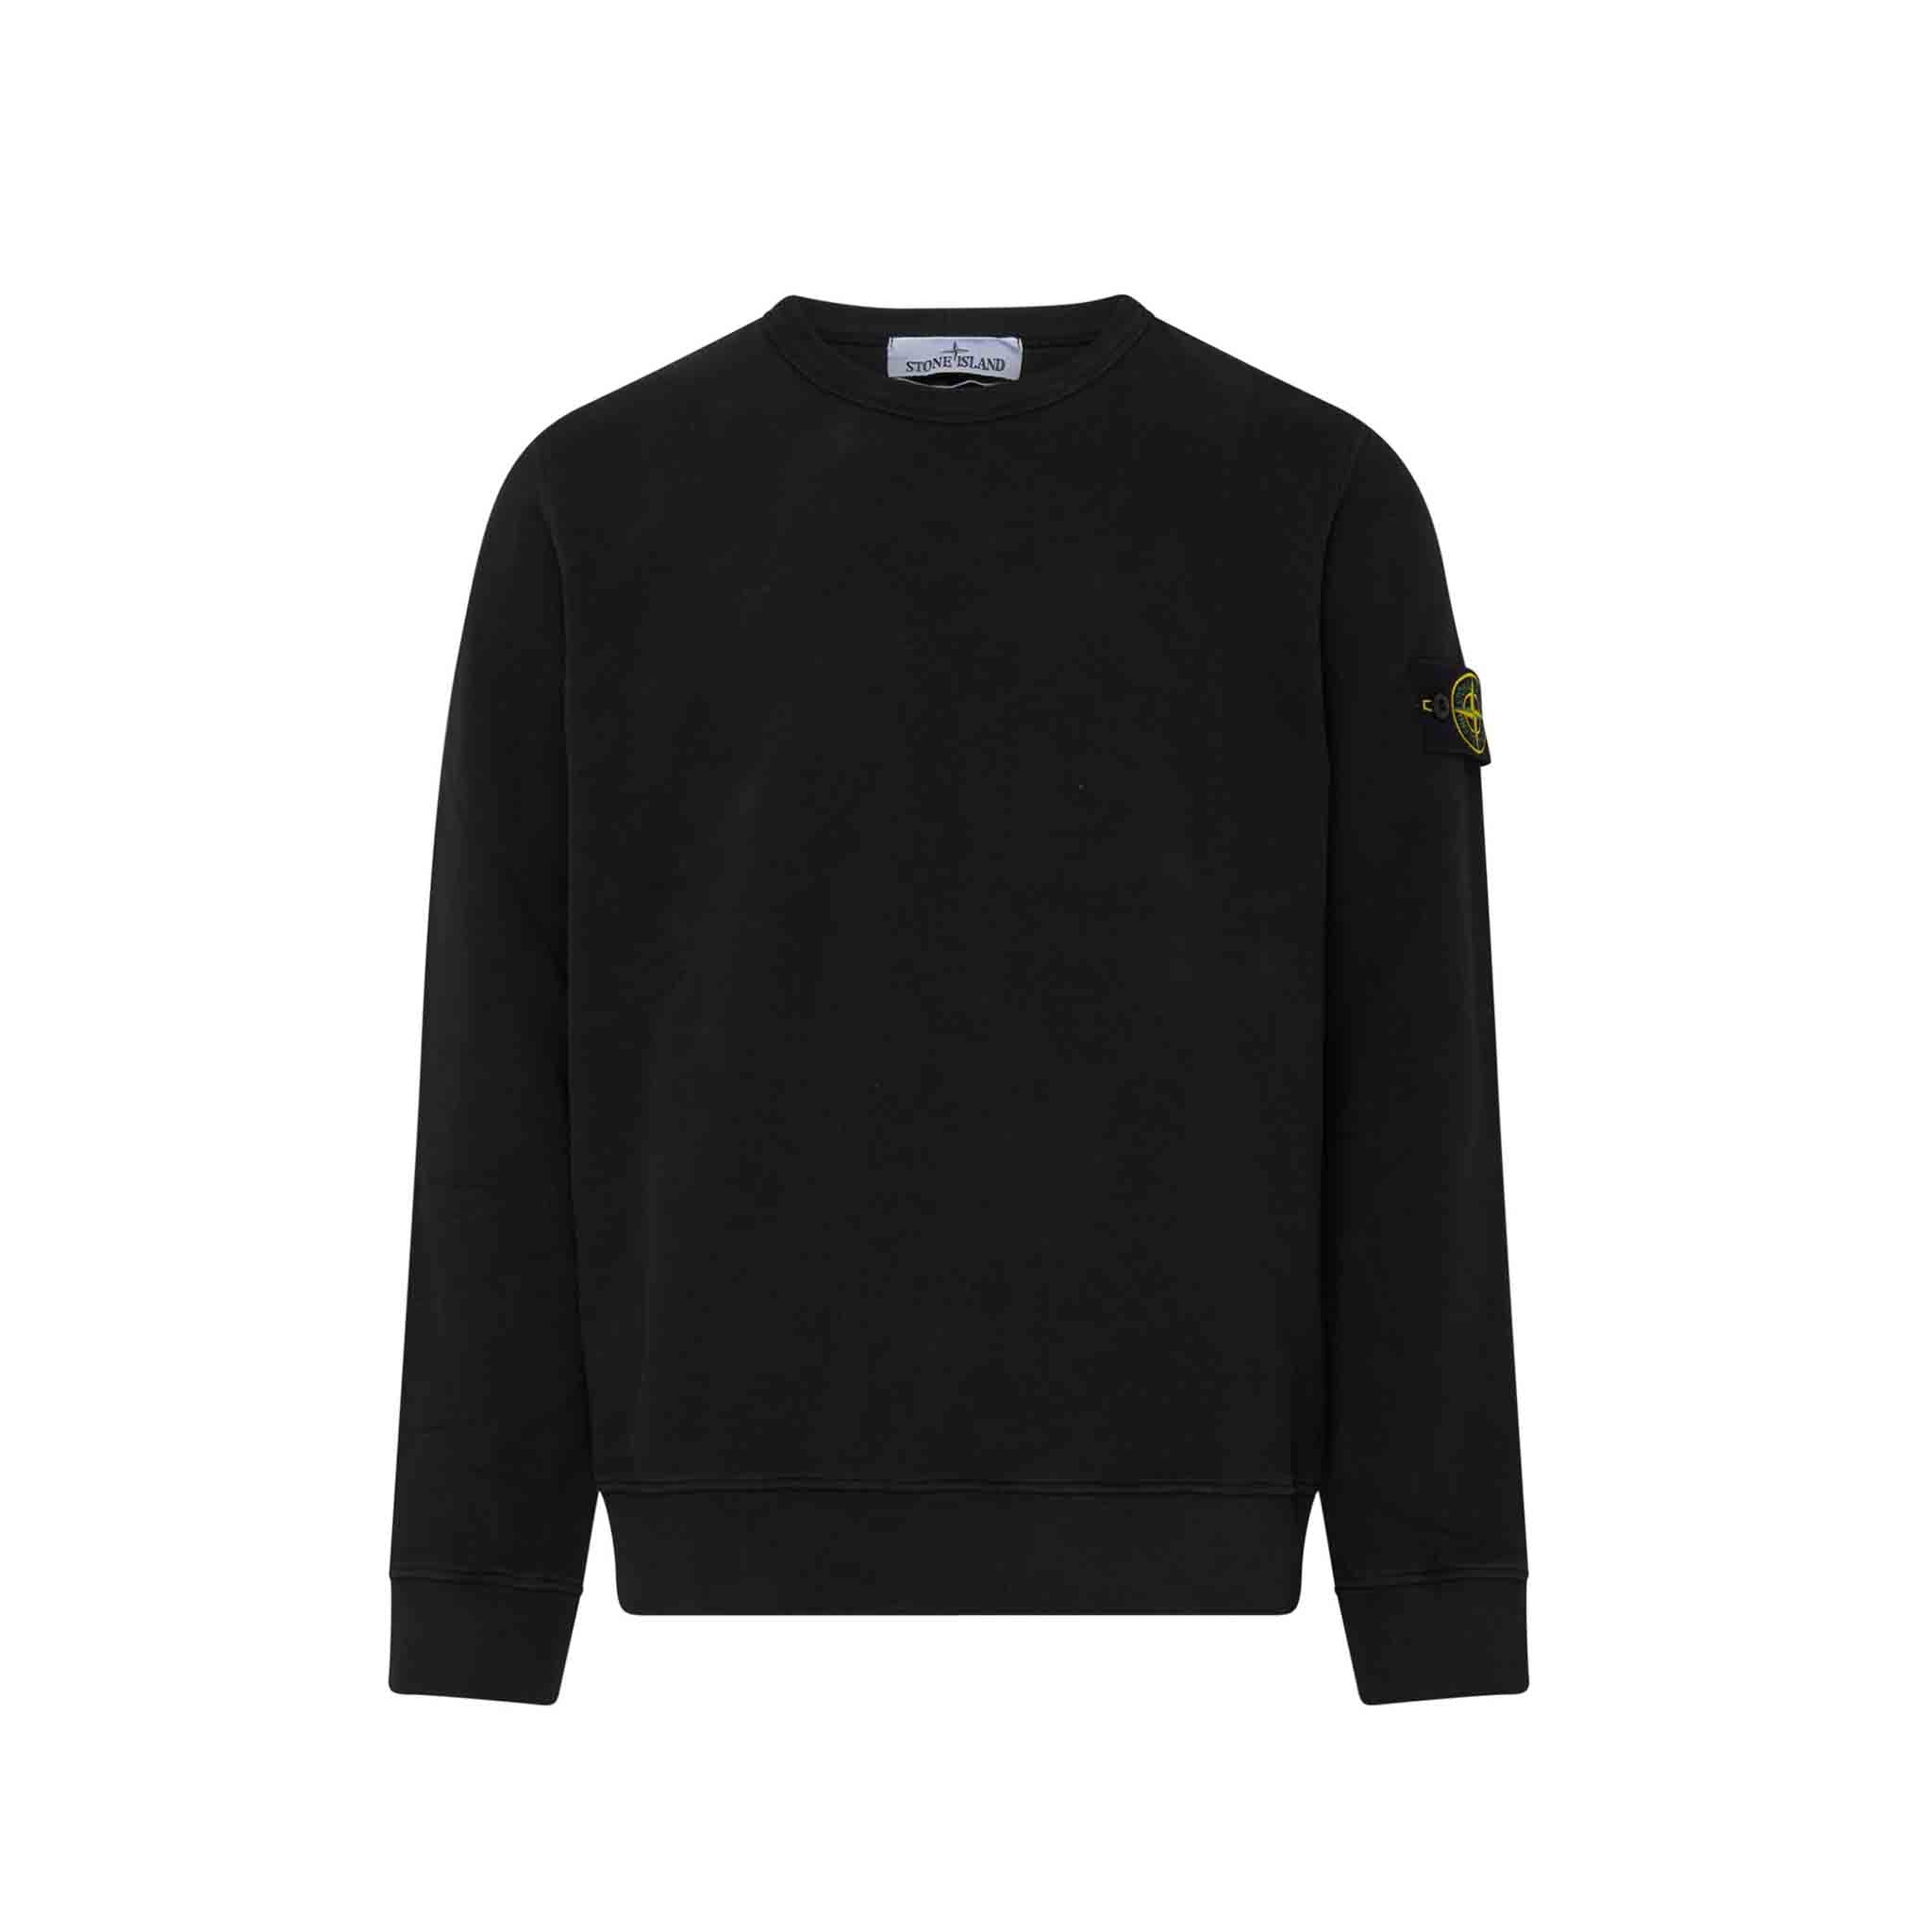 Stone Island Garment Dyed Crewneck Sweatshirt in Black